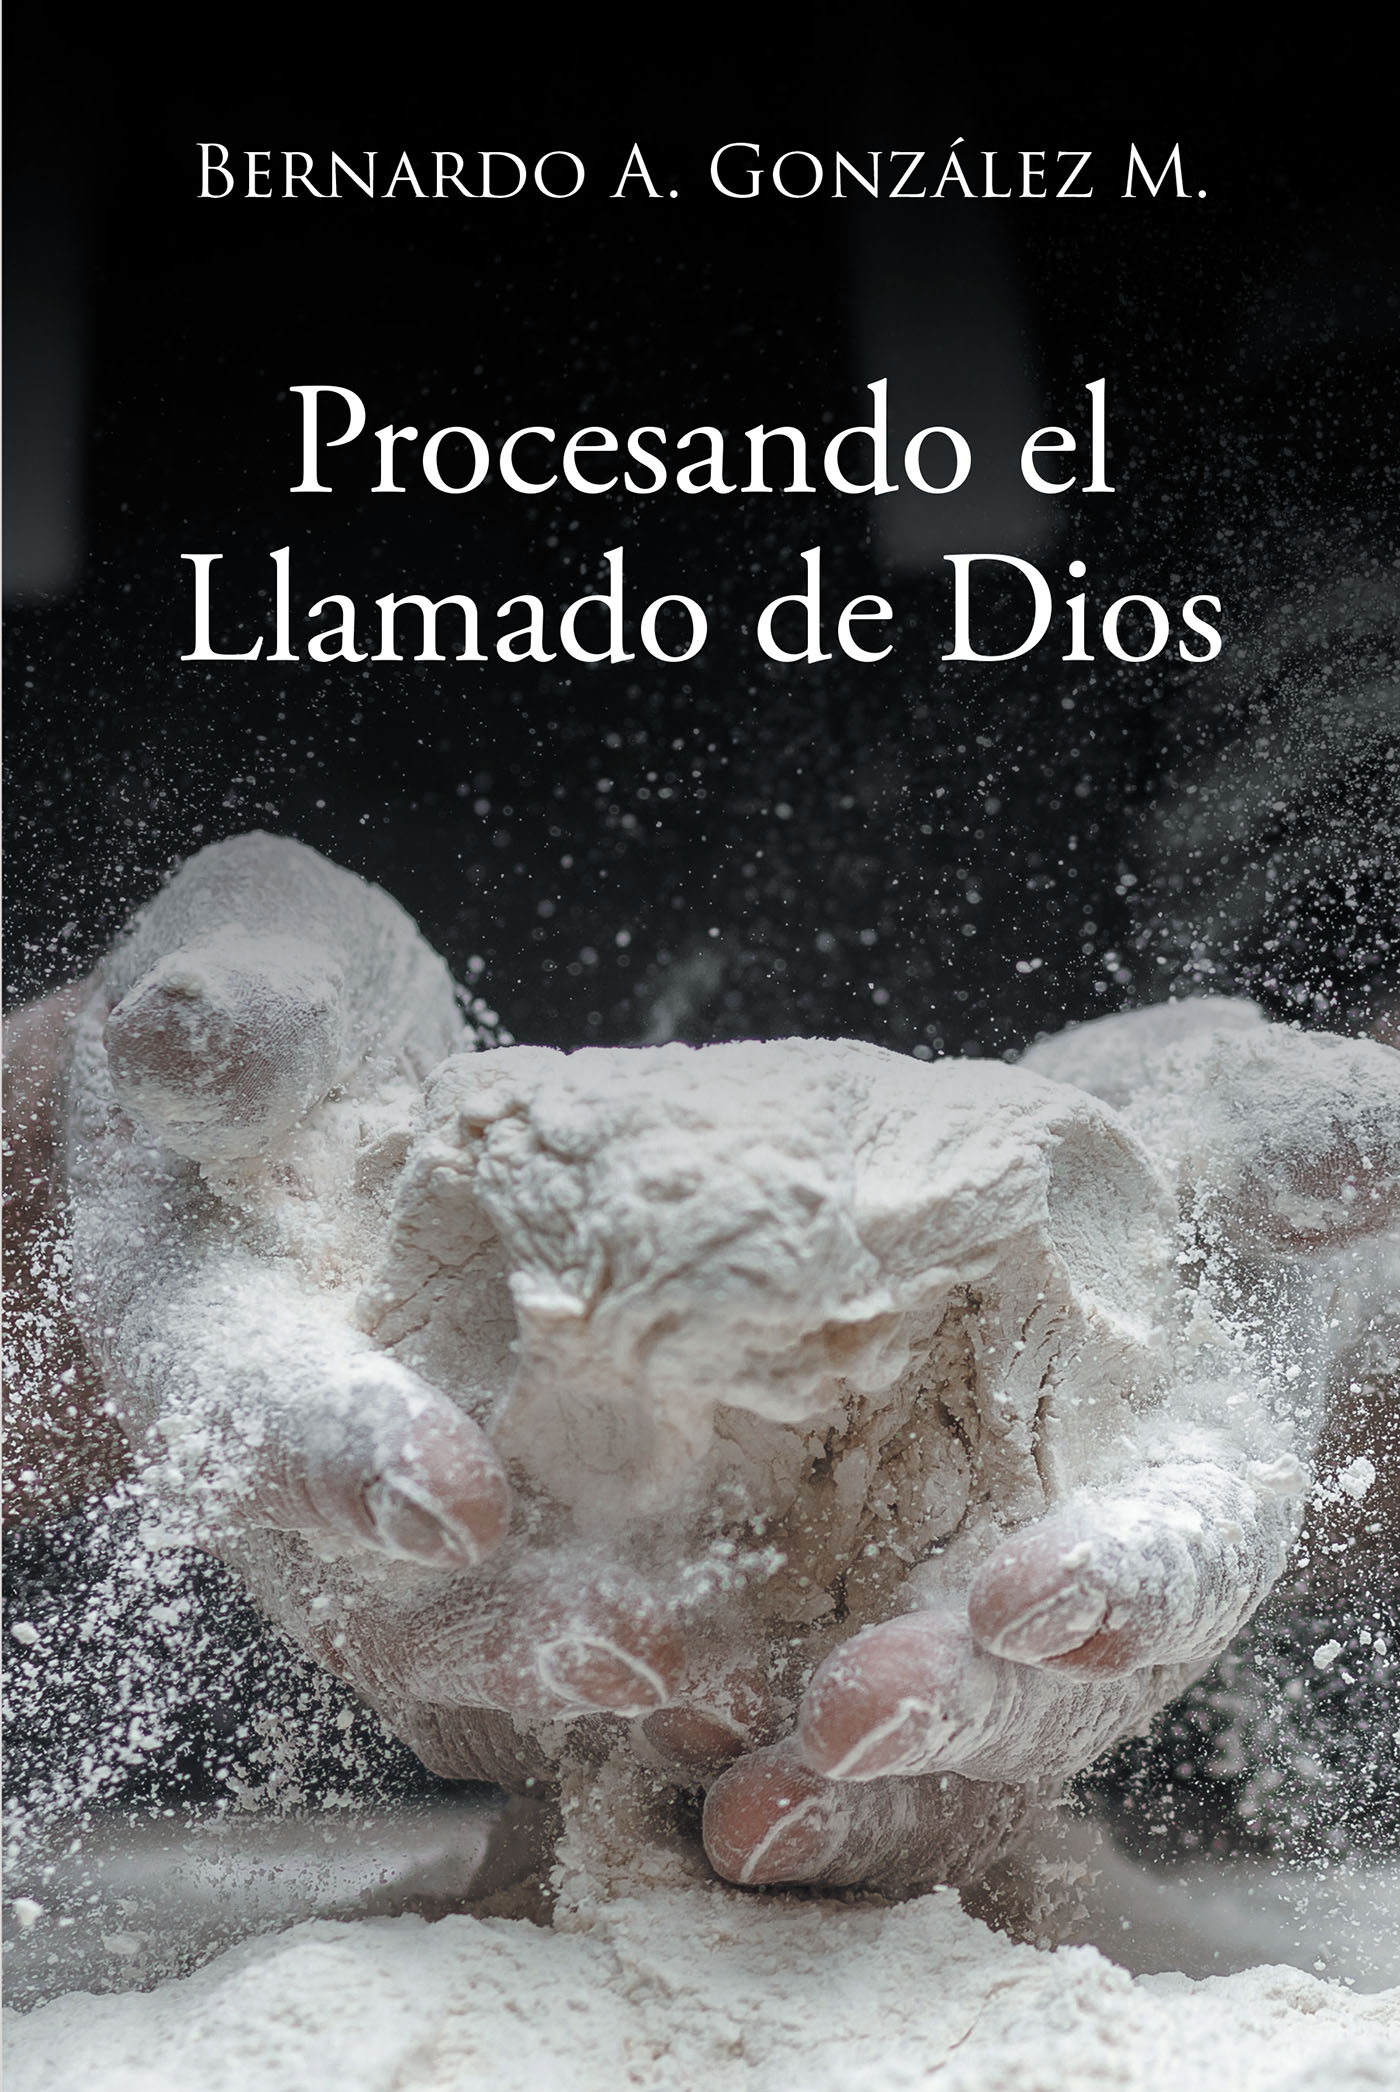 Bernardo A. Gonzalez M.’s "Procesando el Llamado de Dios" Emphasizes the Importance of Faith in Fulfilling Life’s Purpose